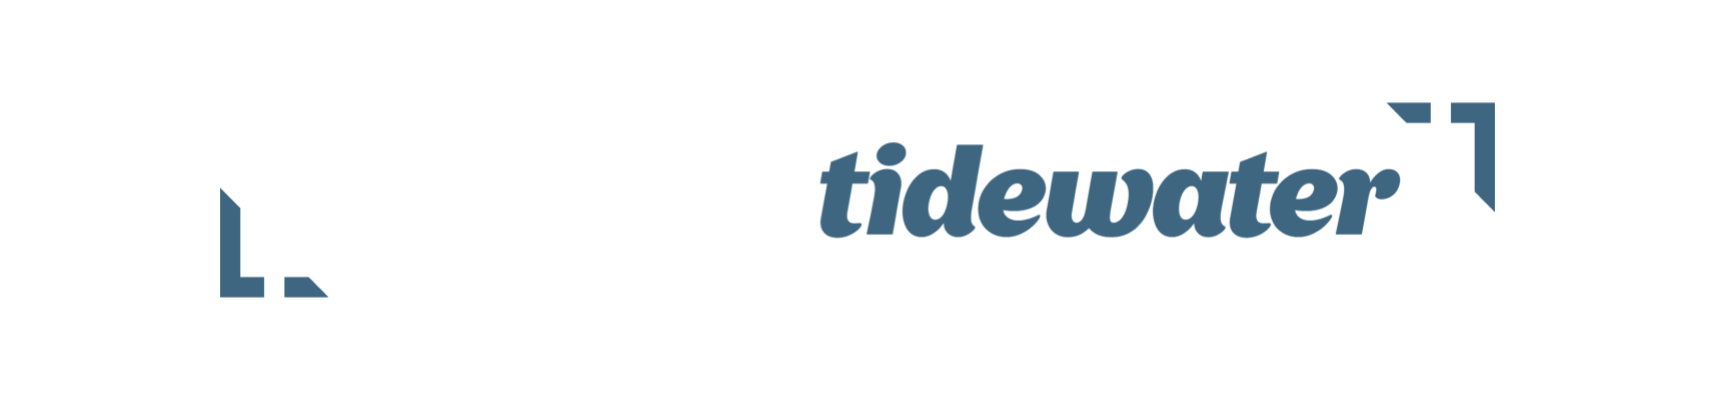 Western Tidewater Community Services Board